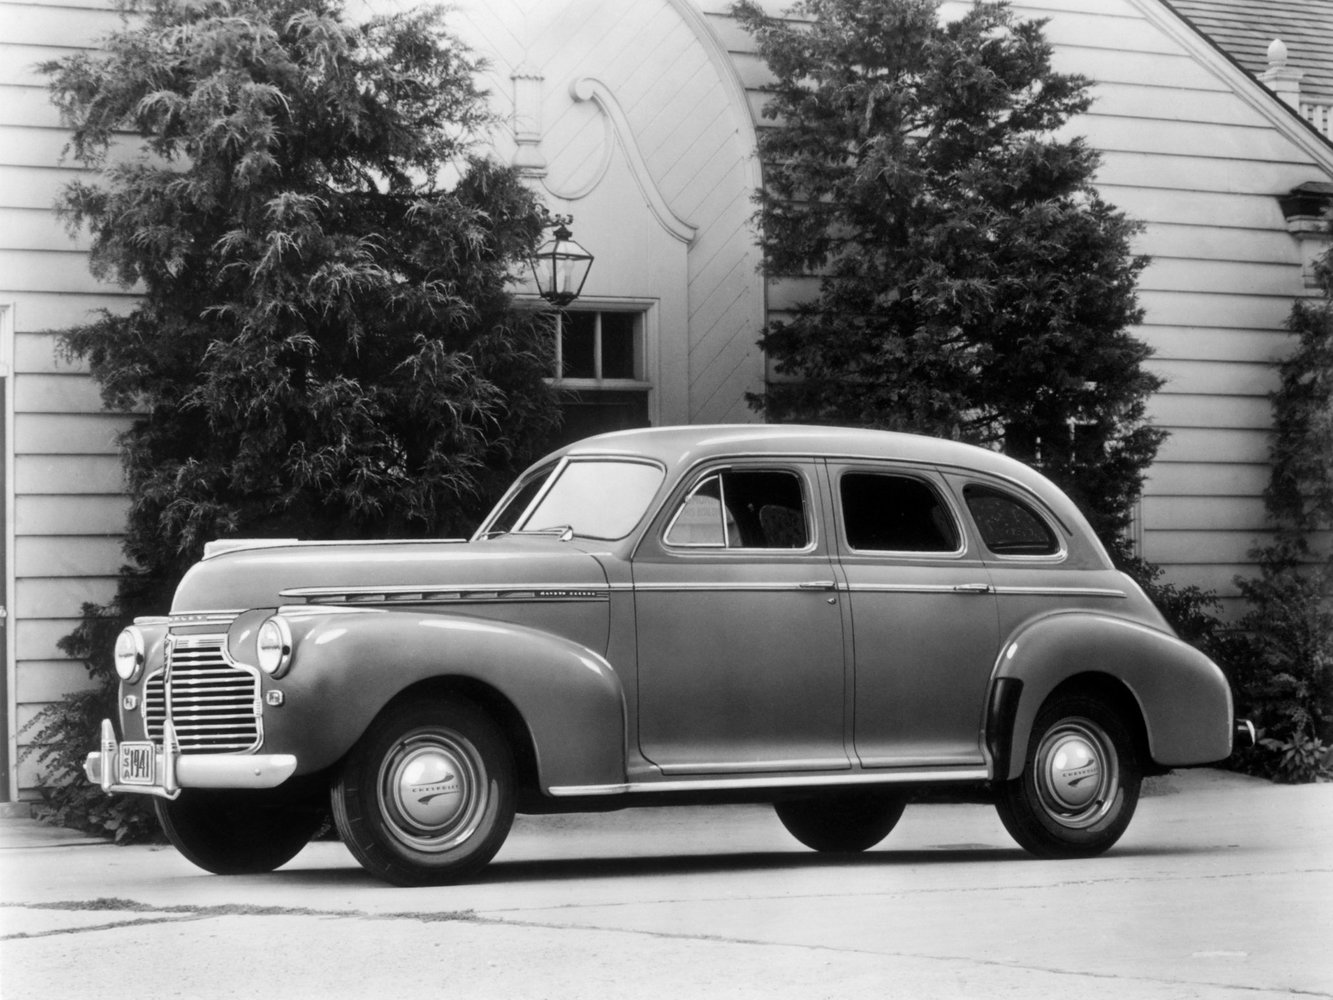 Chevrolet Master 1933 - 1942